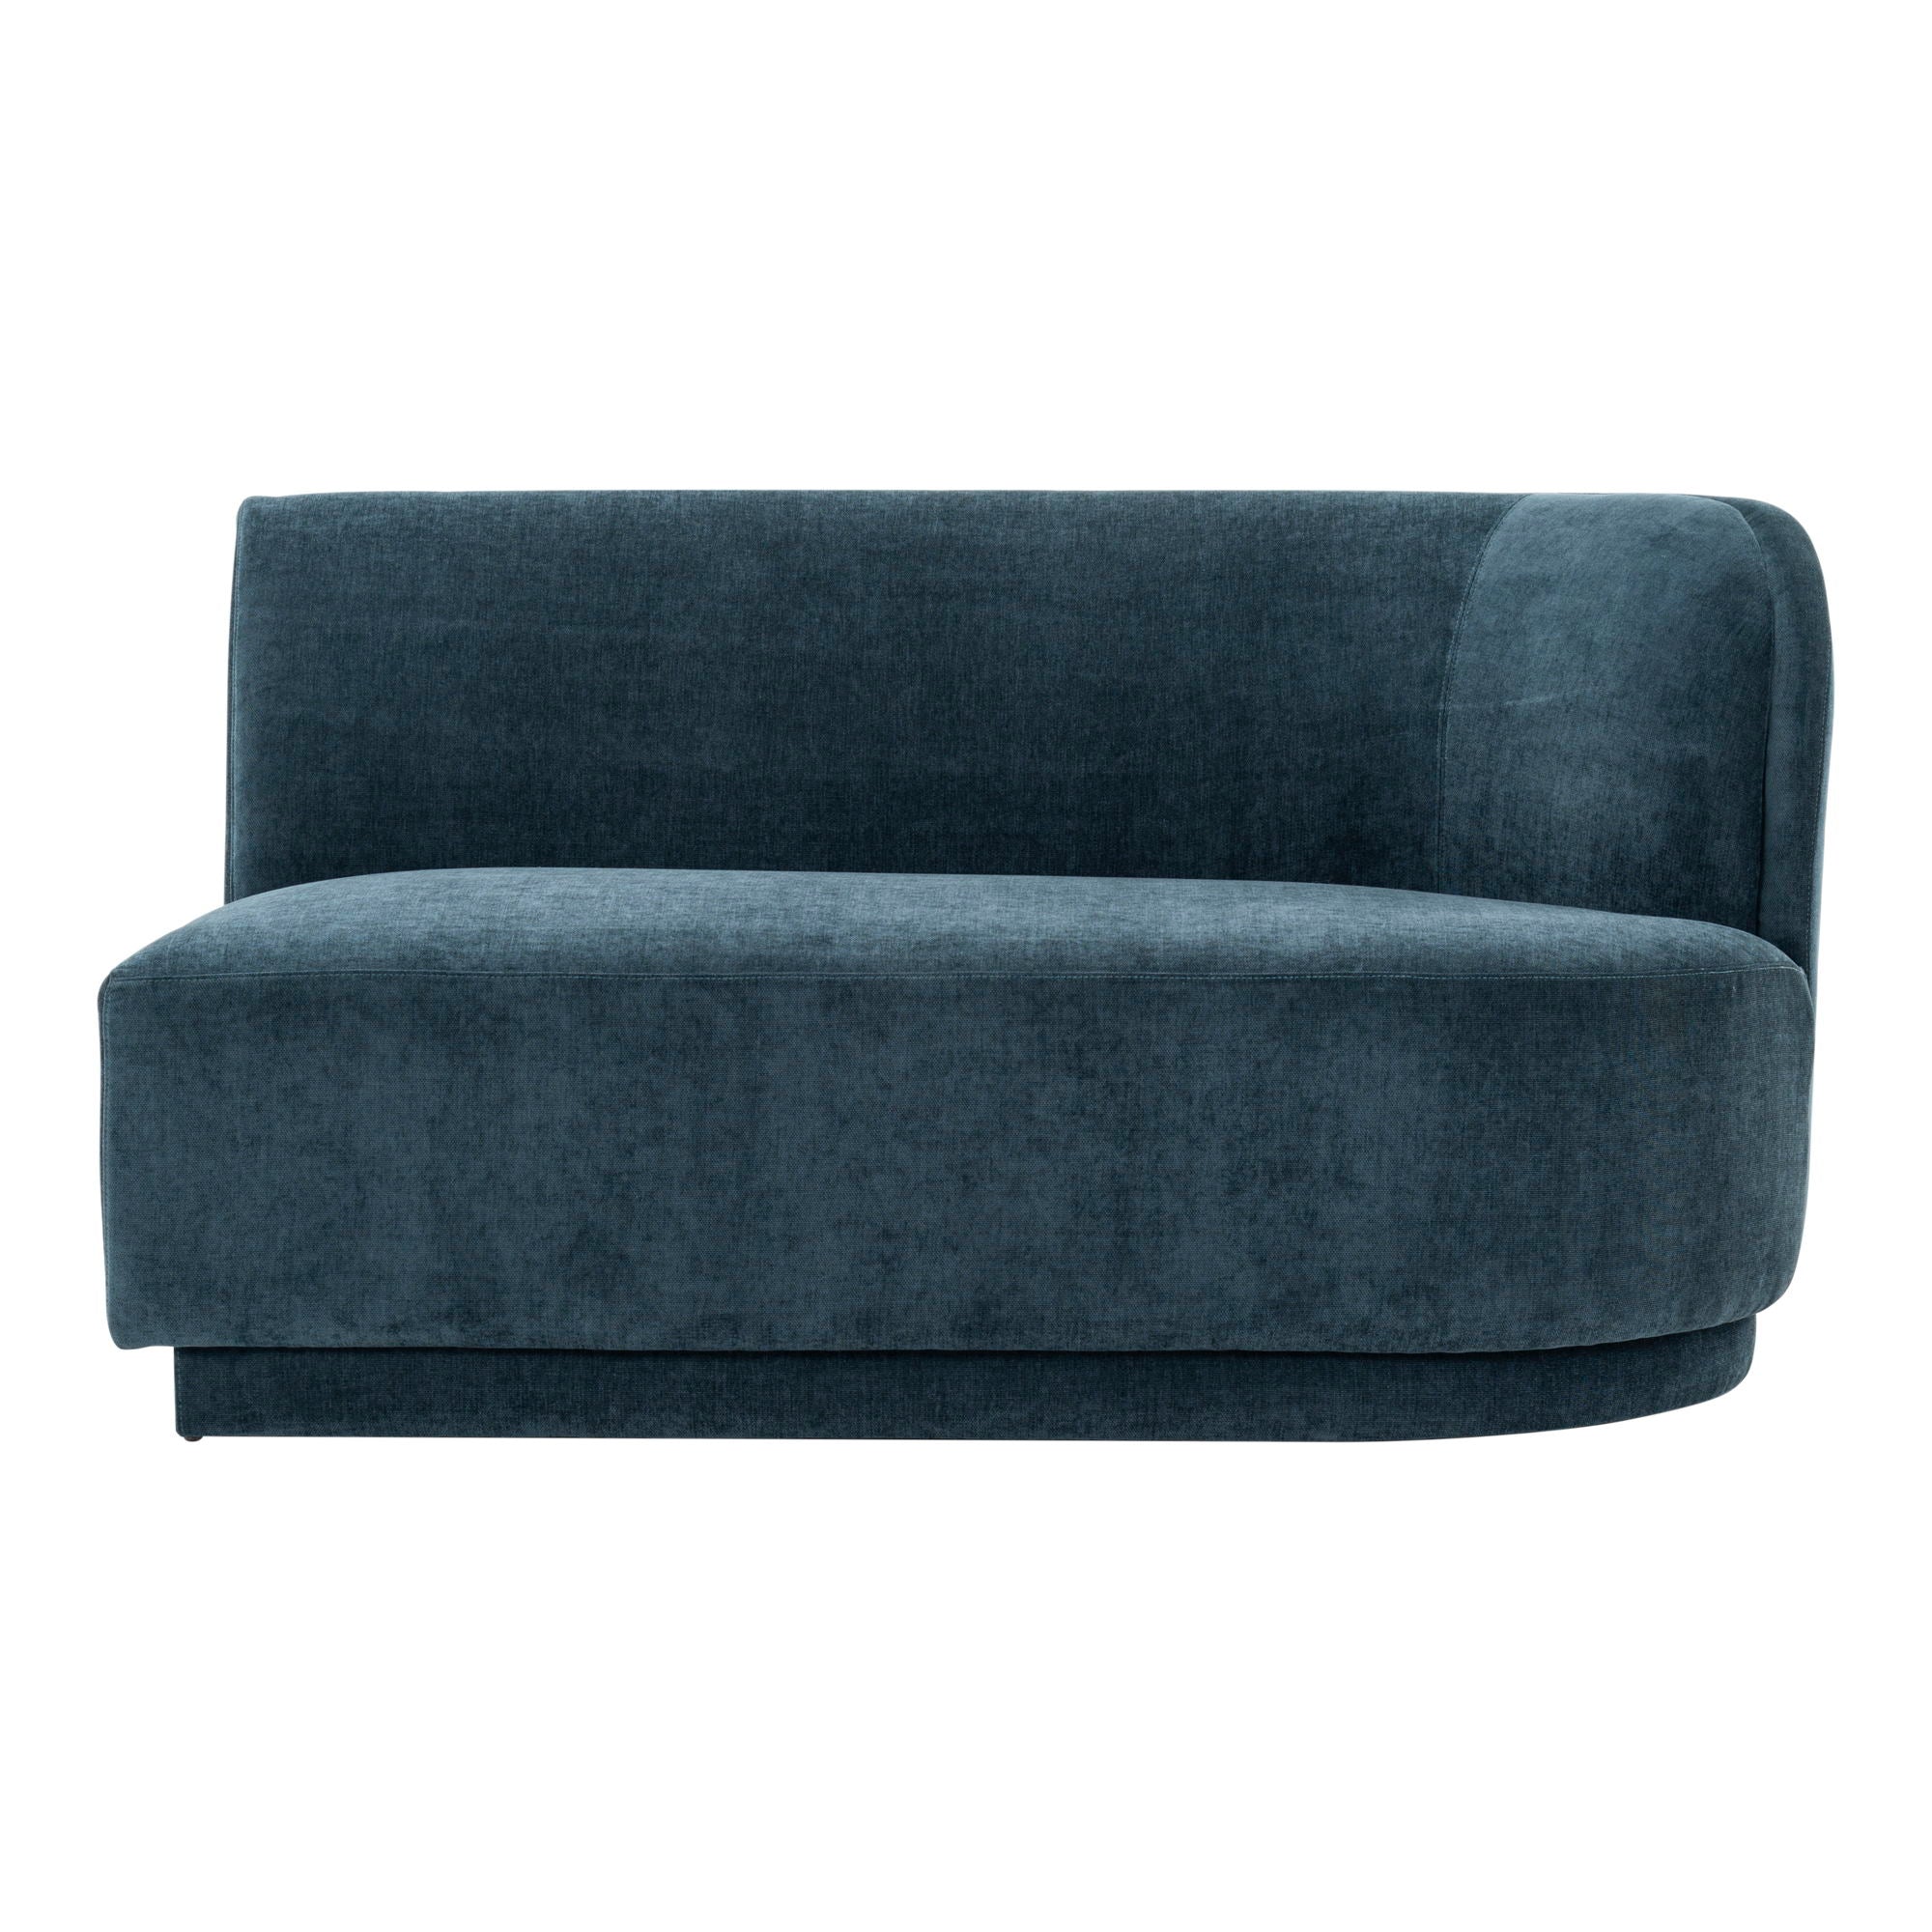 Yoon - 2 Seat Sofa Right - Blue